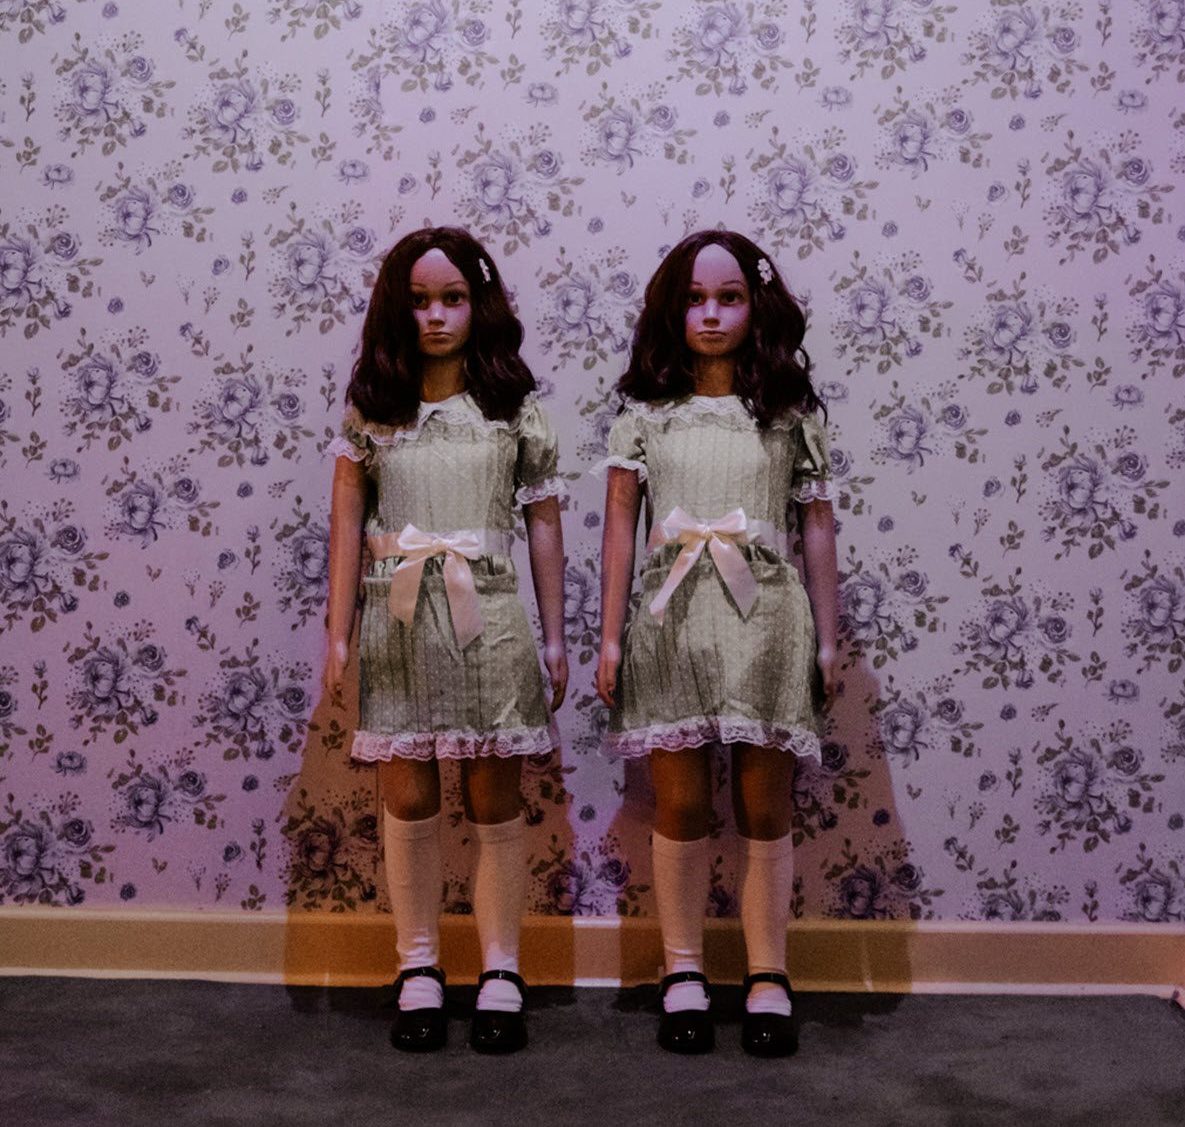 creepy dolls like the Shining twins 